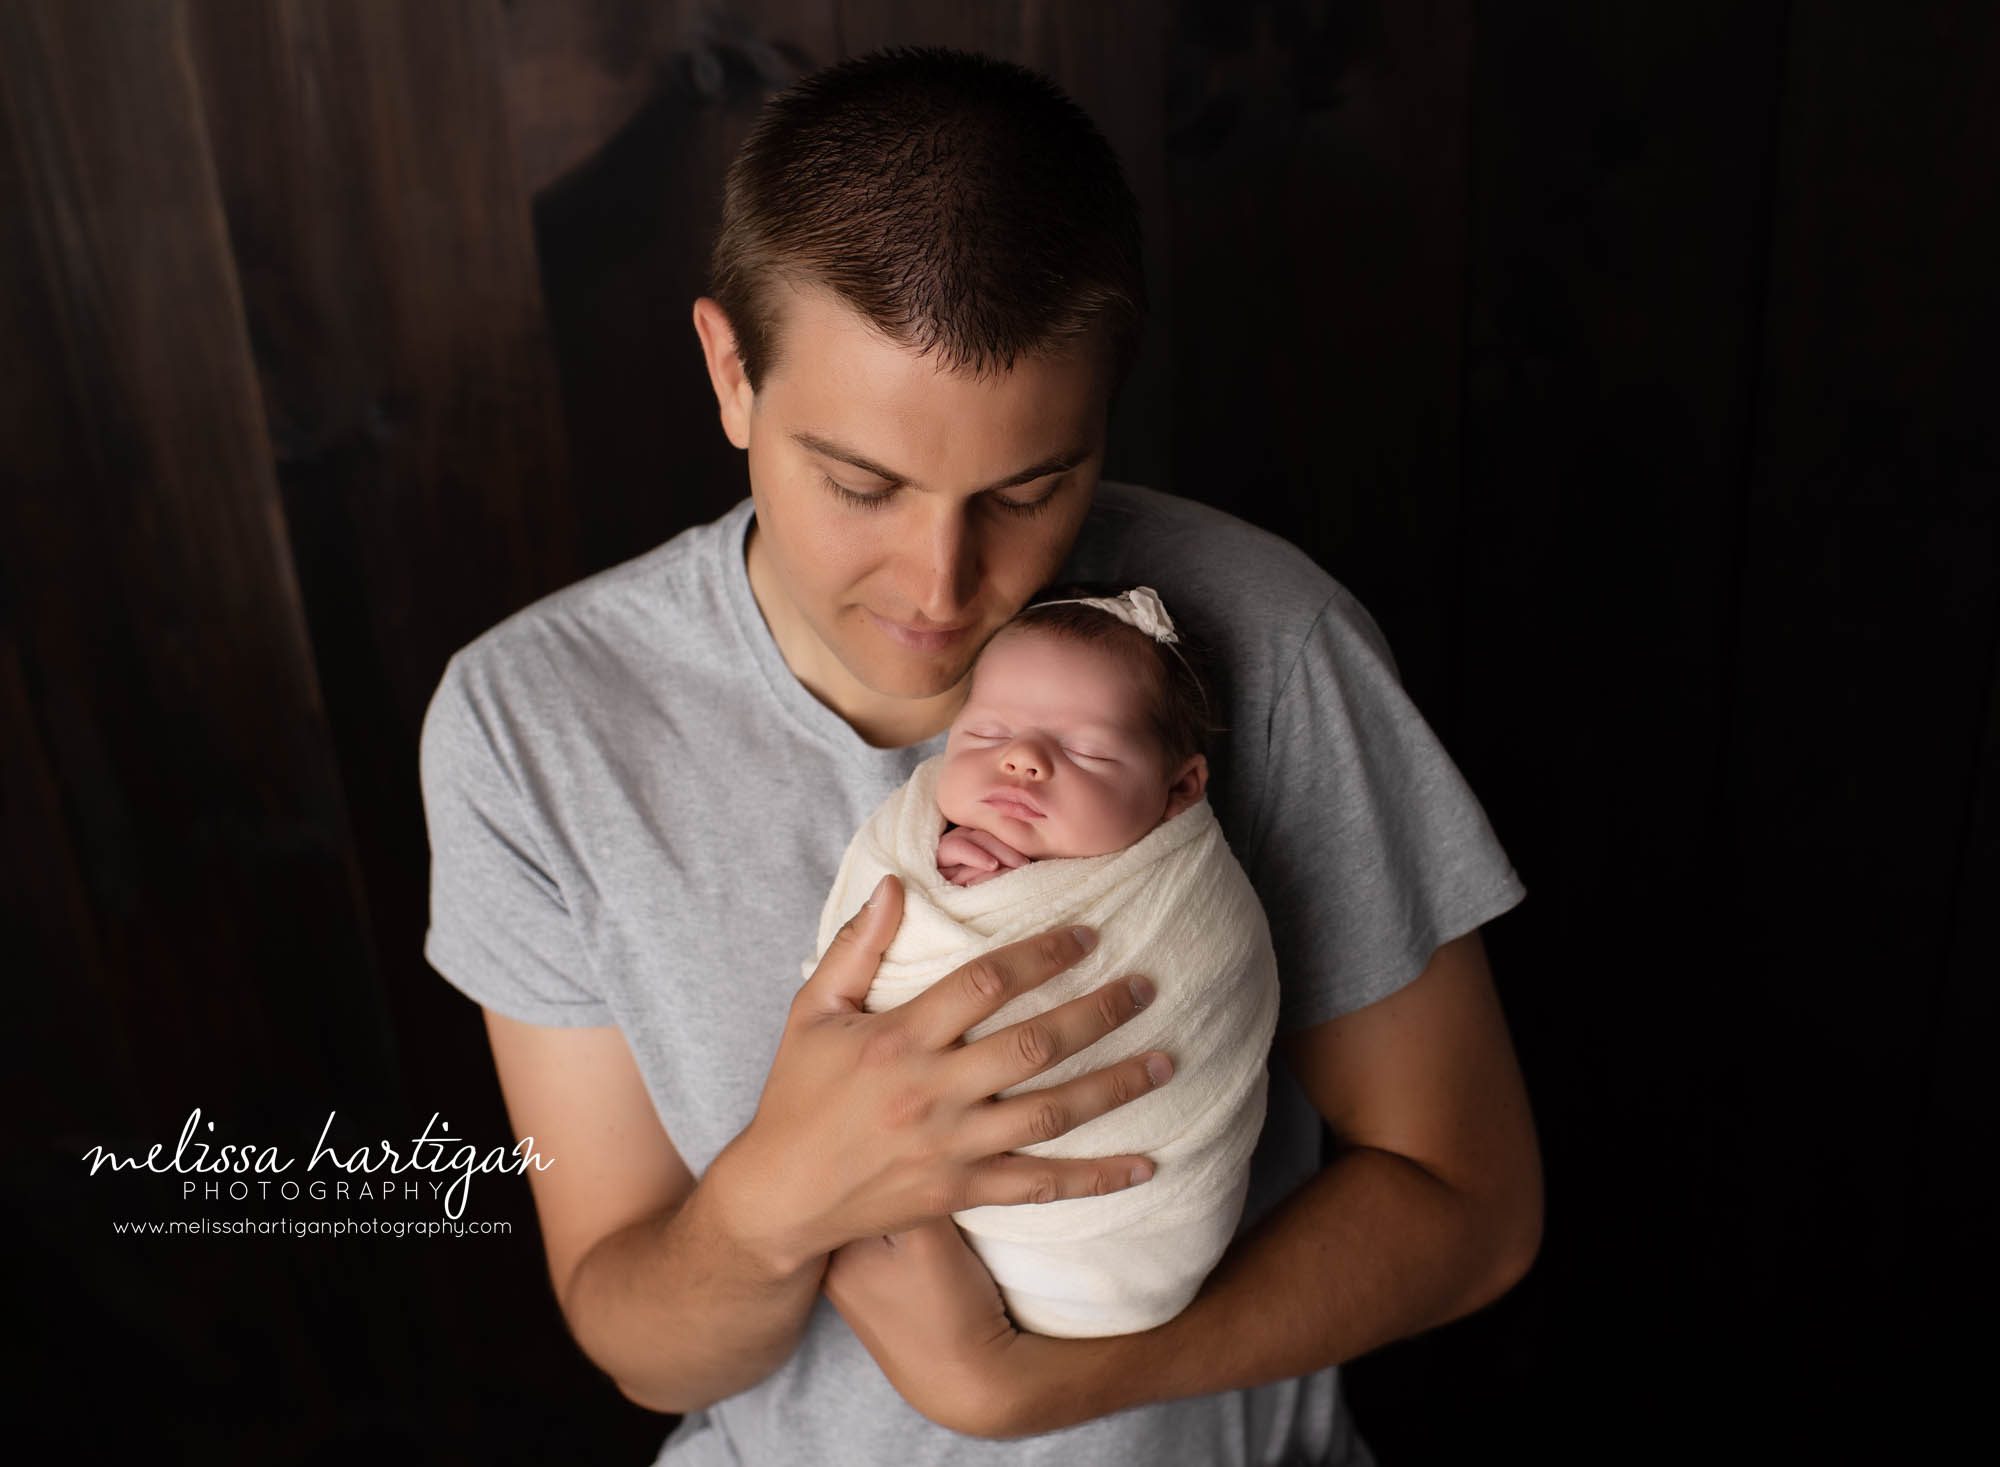 Dad holding baby girl in studio newborn session